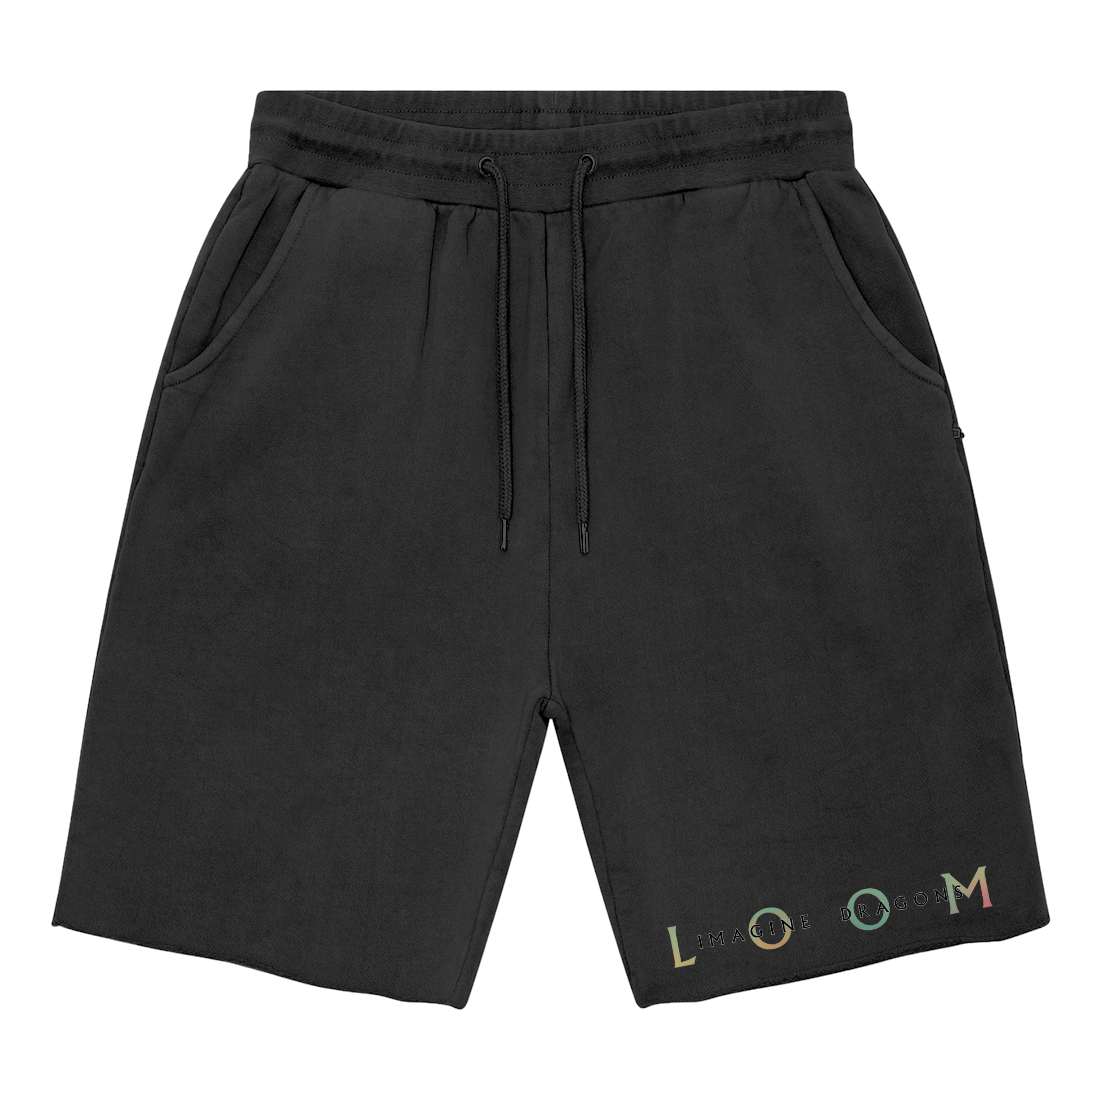 LOOM Shorts